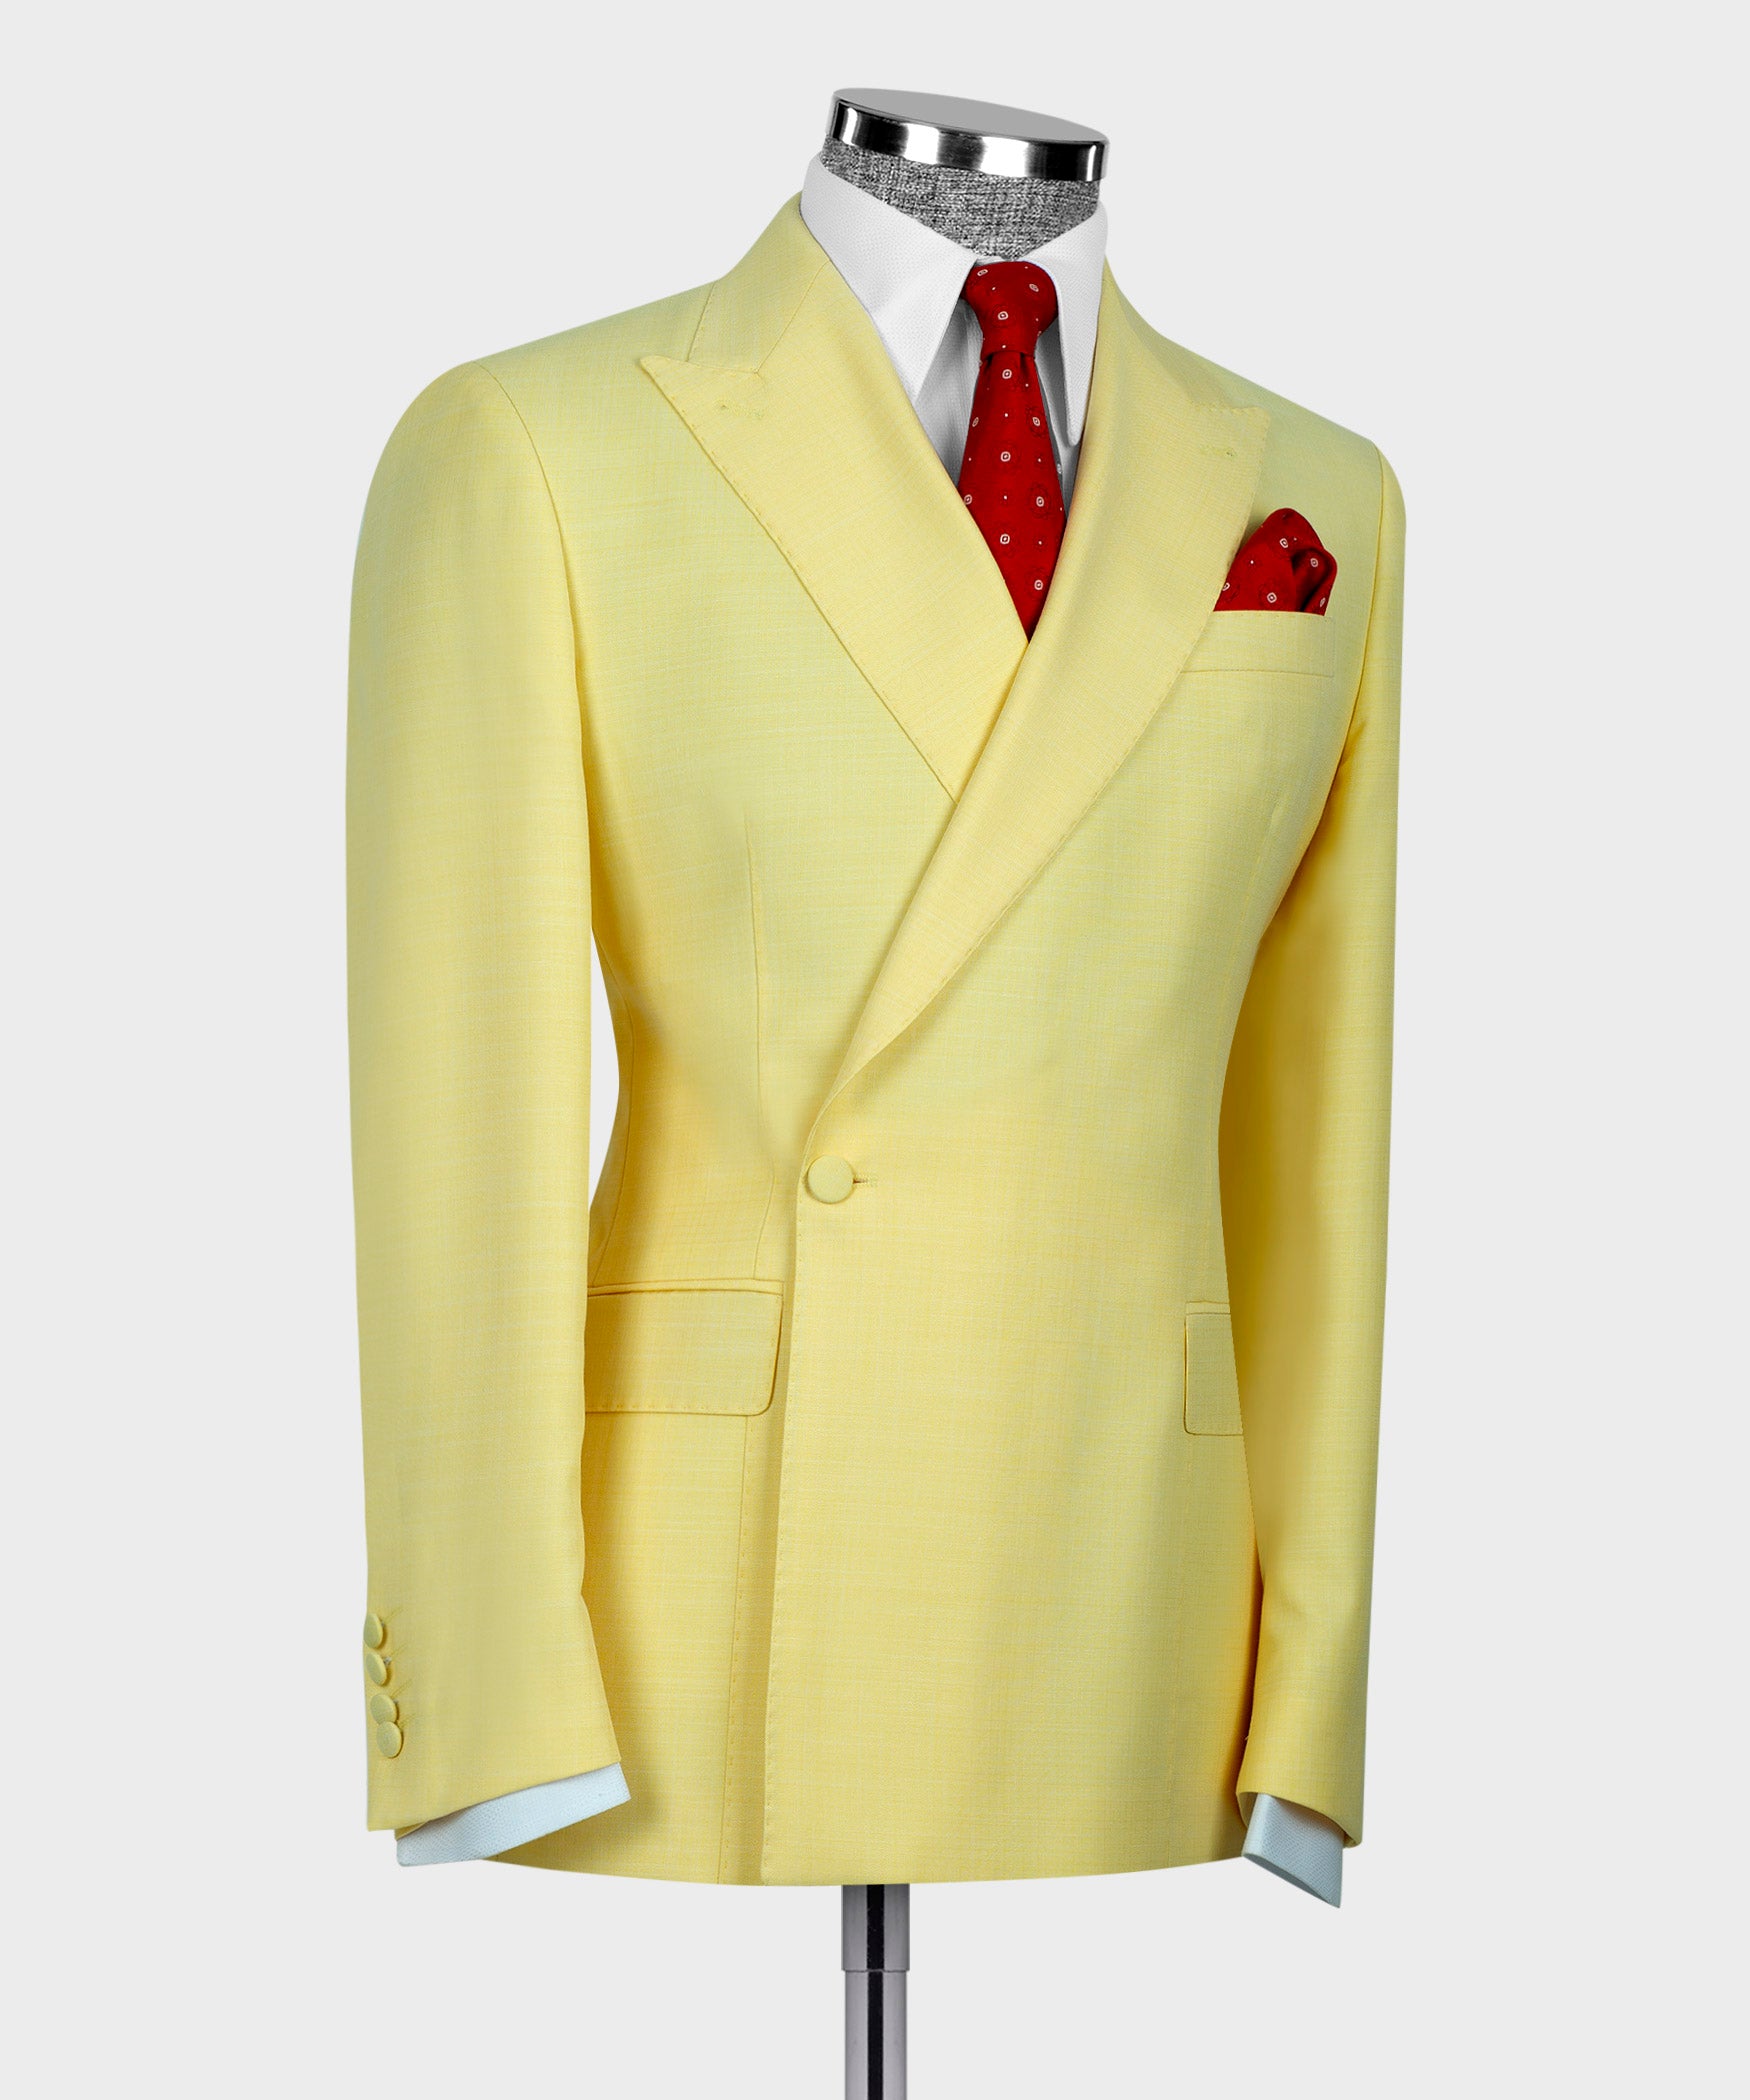 Mens Yellow Suit Costume